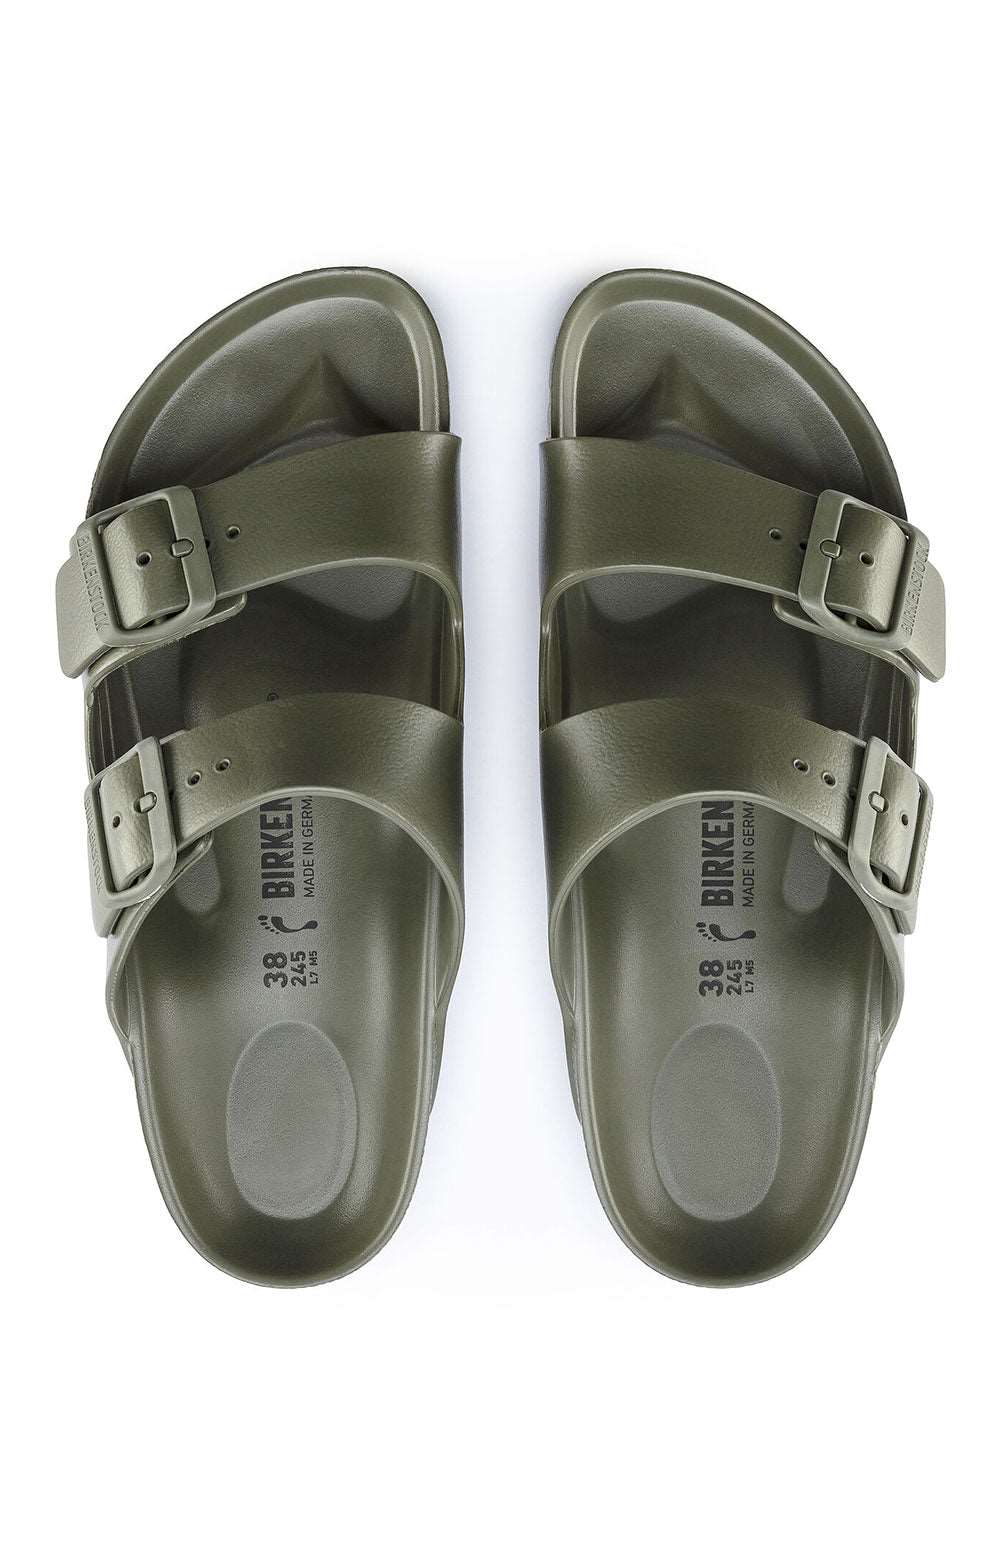 (1019152) Arizona EVA Sandals - Khaki